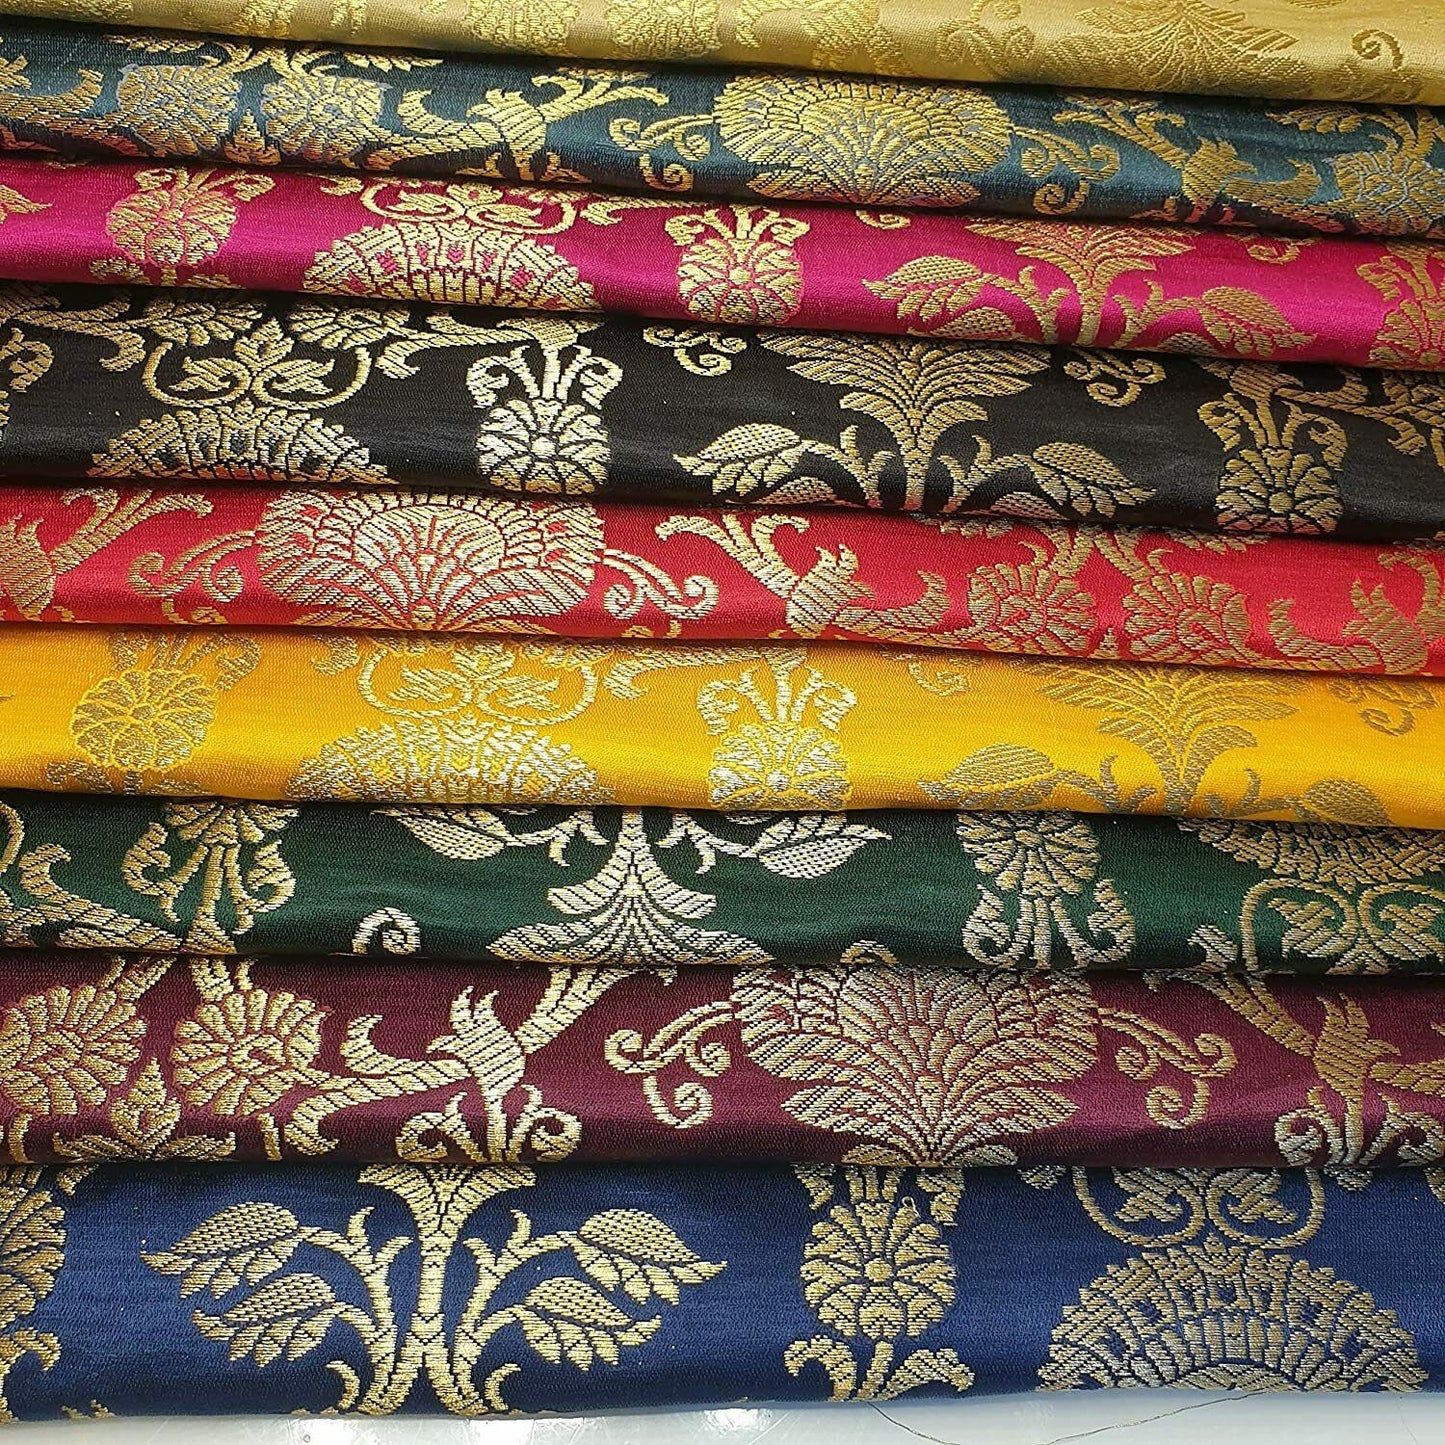 New Prints Ornamental Floral Gold Metallic Print Indian Banarasi Brocade Fabric (Red)